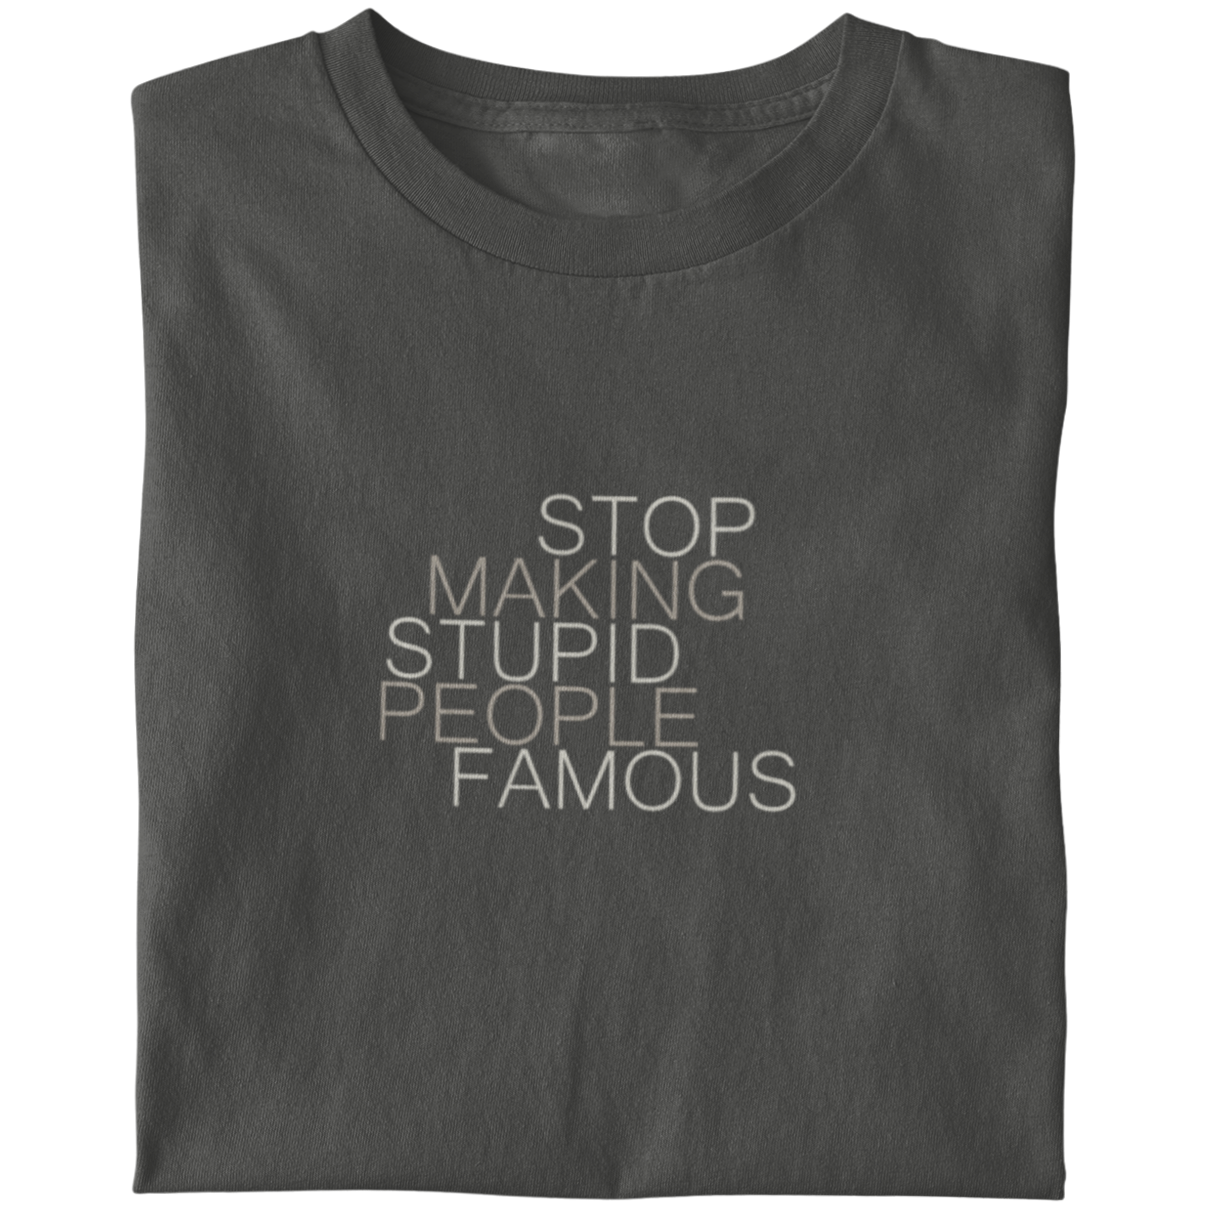 Stop Making Stupid People Famous - Women's T-Shirt